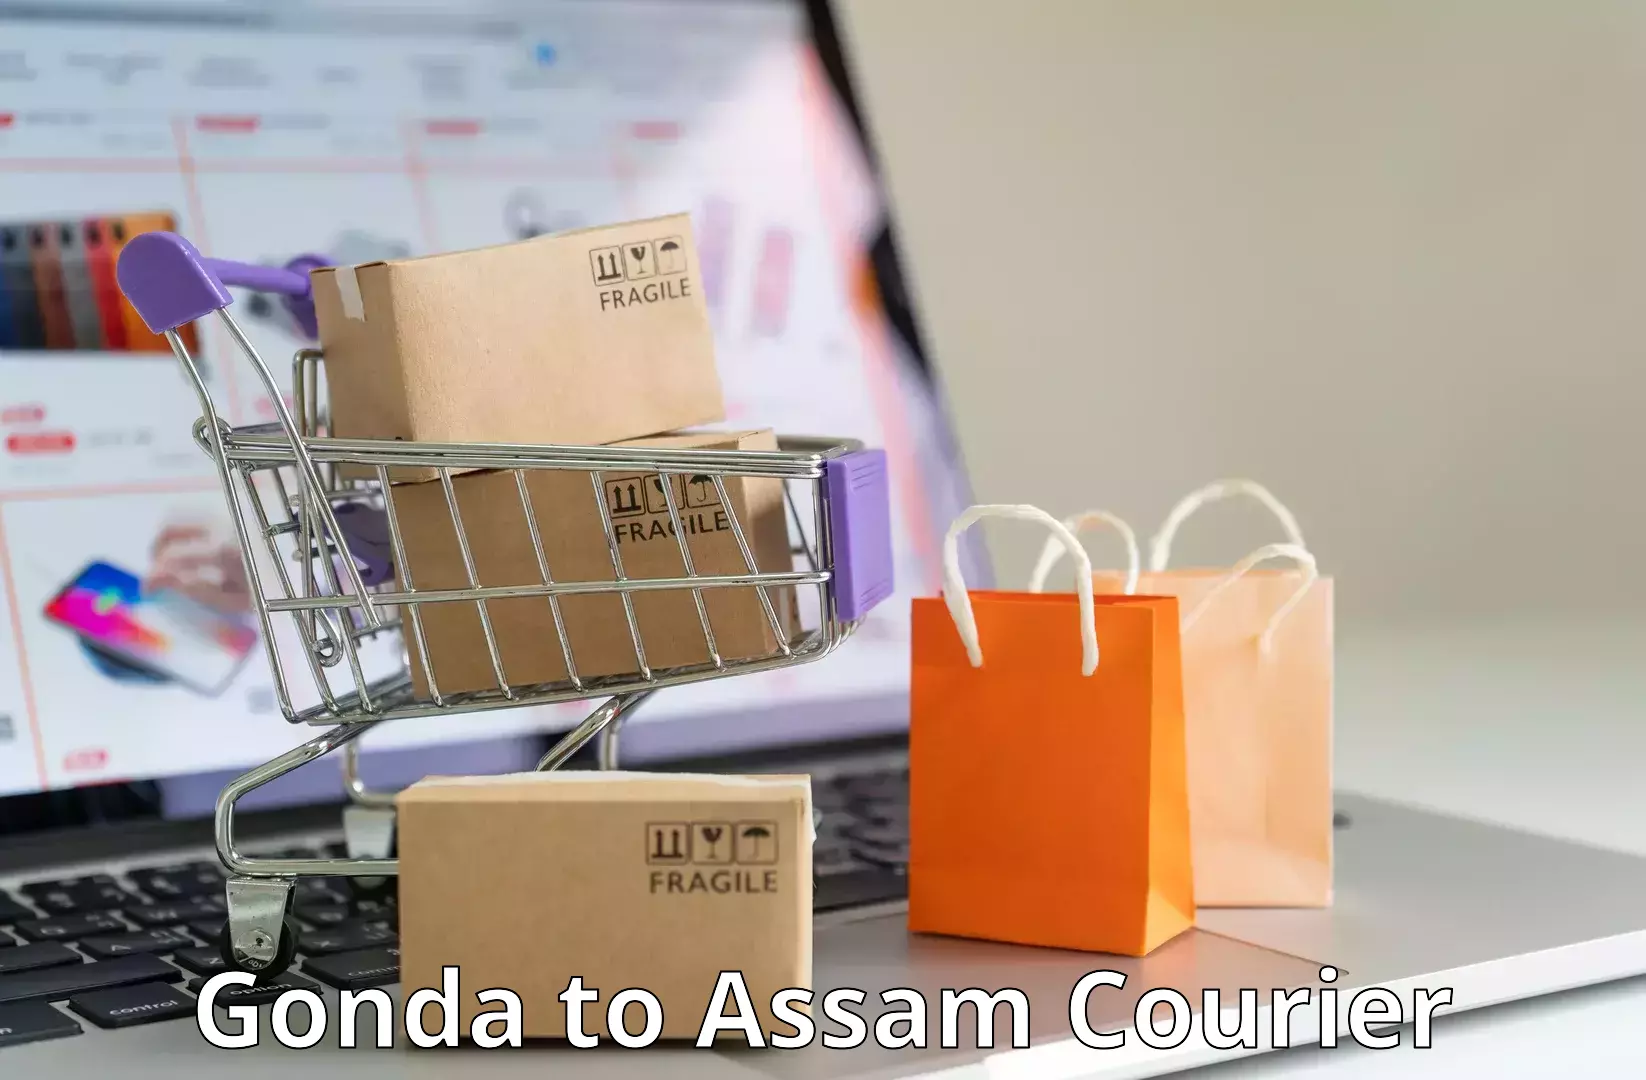 Local delivery service Gonda to Assam